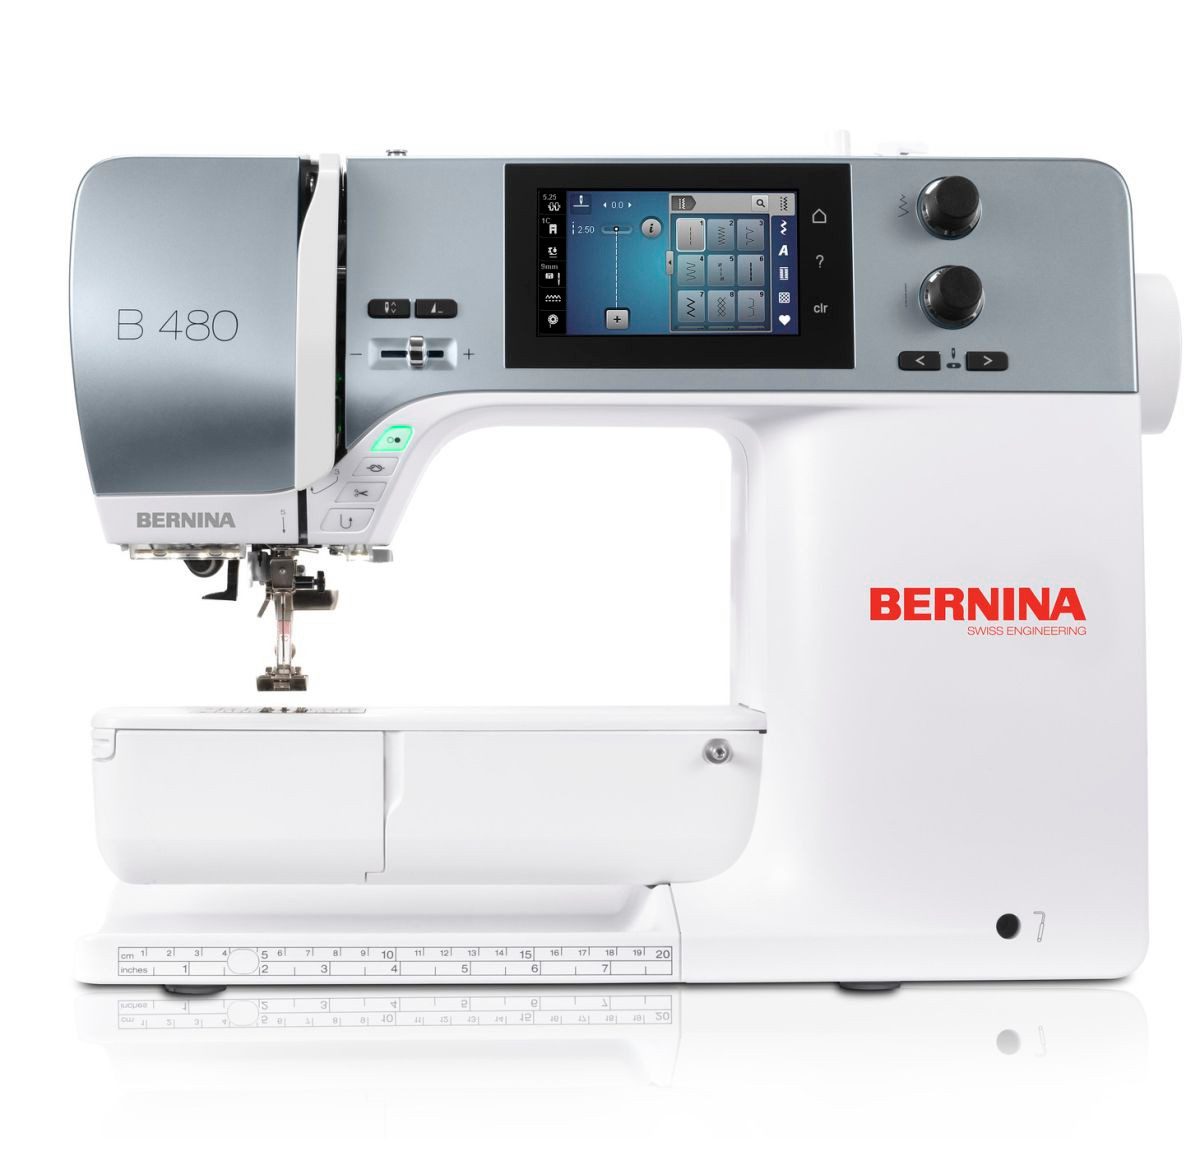 Bernina Computer-Nähmaschine B 480, 994 Programme, 9mm Stichbreite, Farb-Touchscreen, Jumbo- Spule